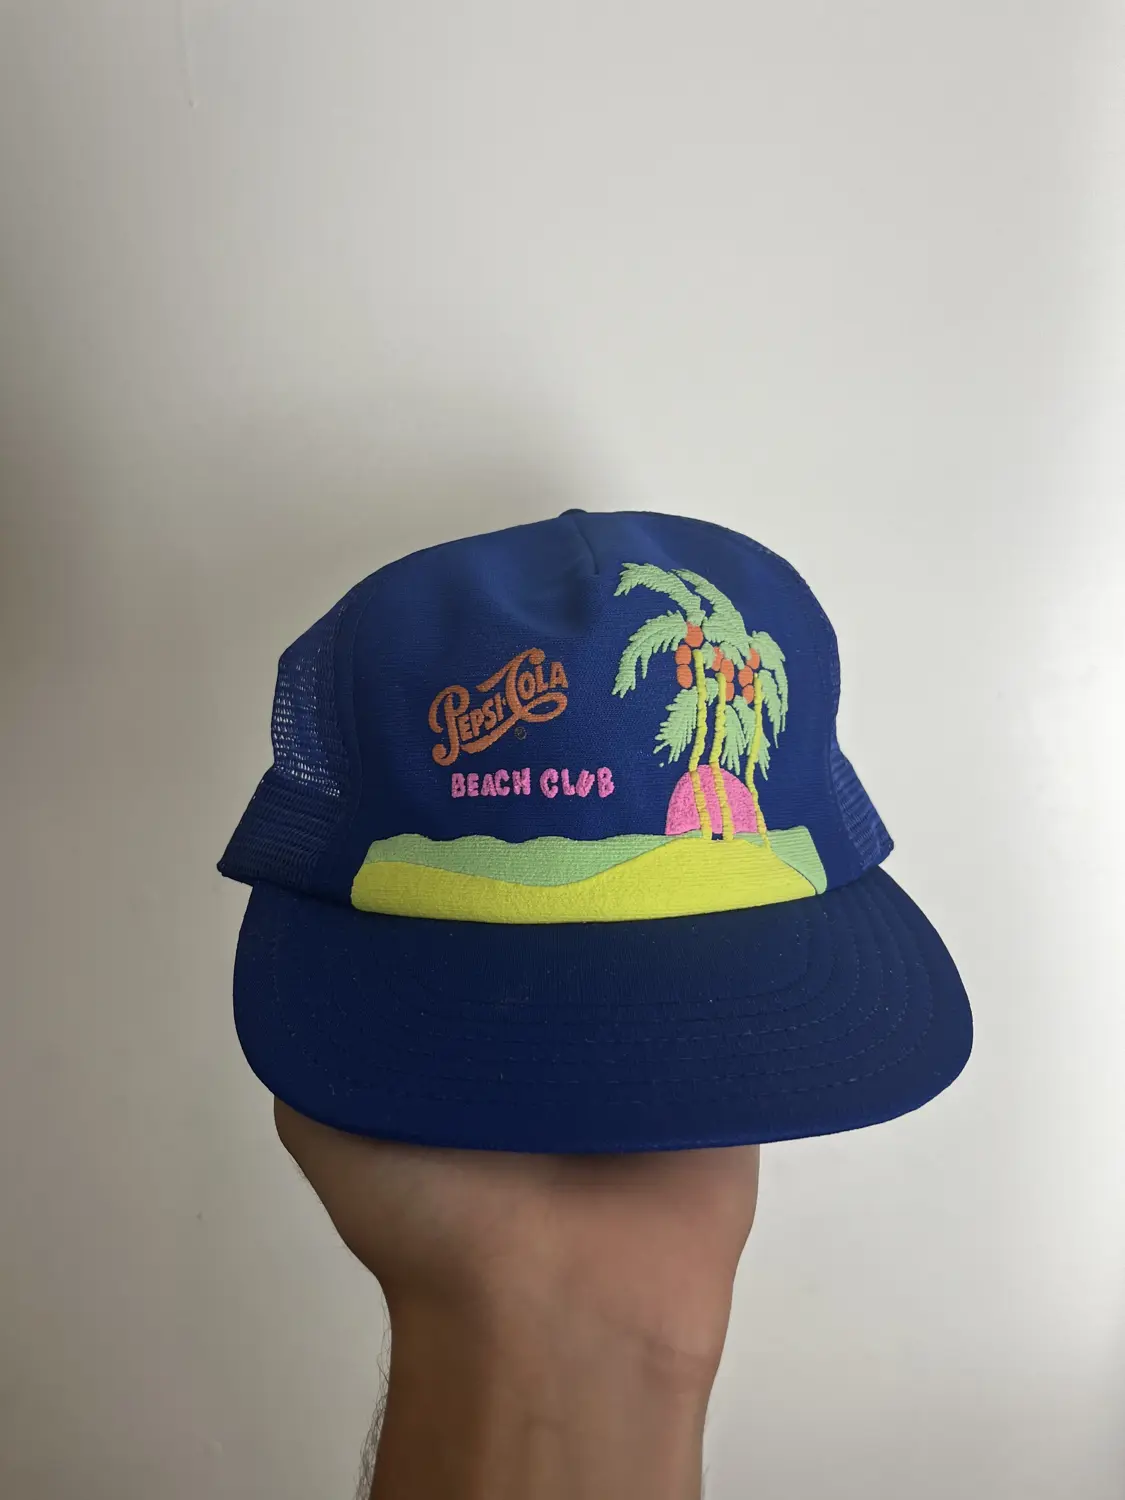 Vintage Pepsi Beach Club Hat